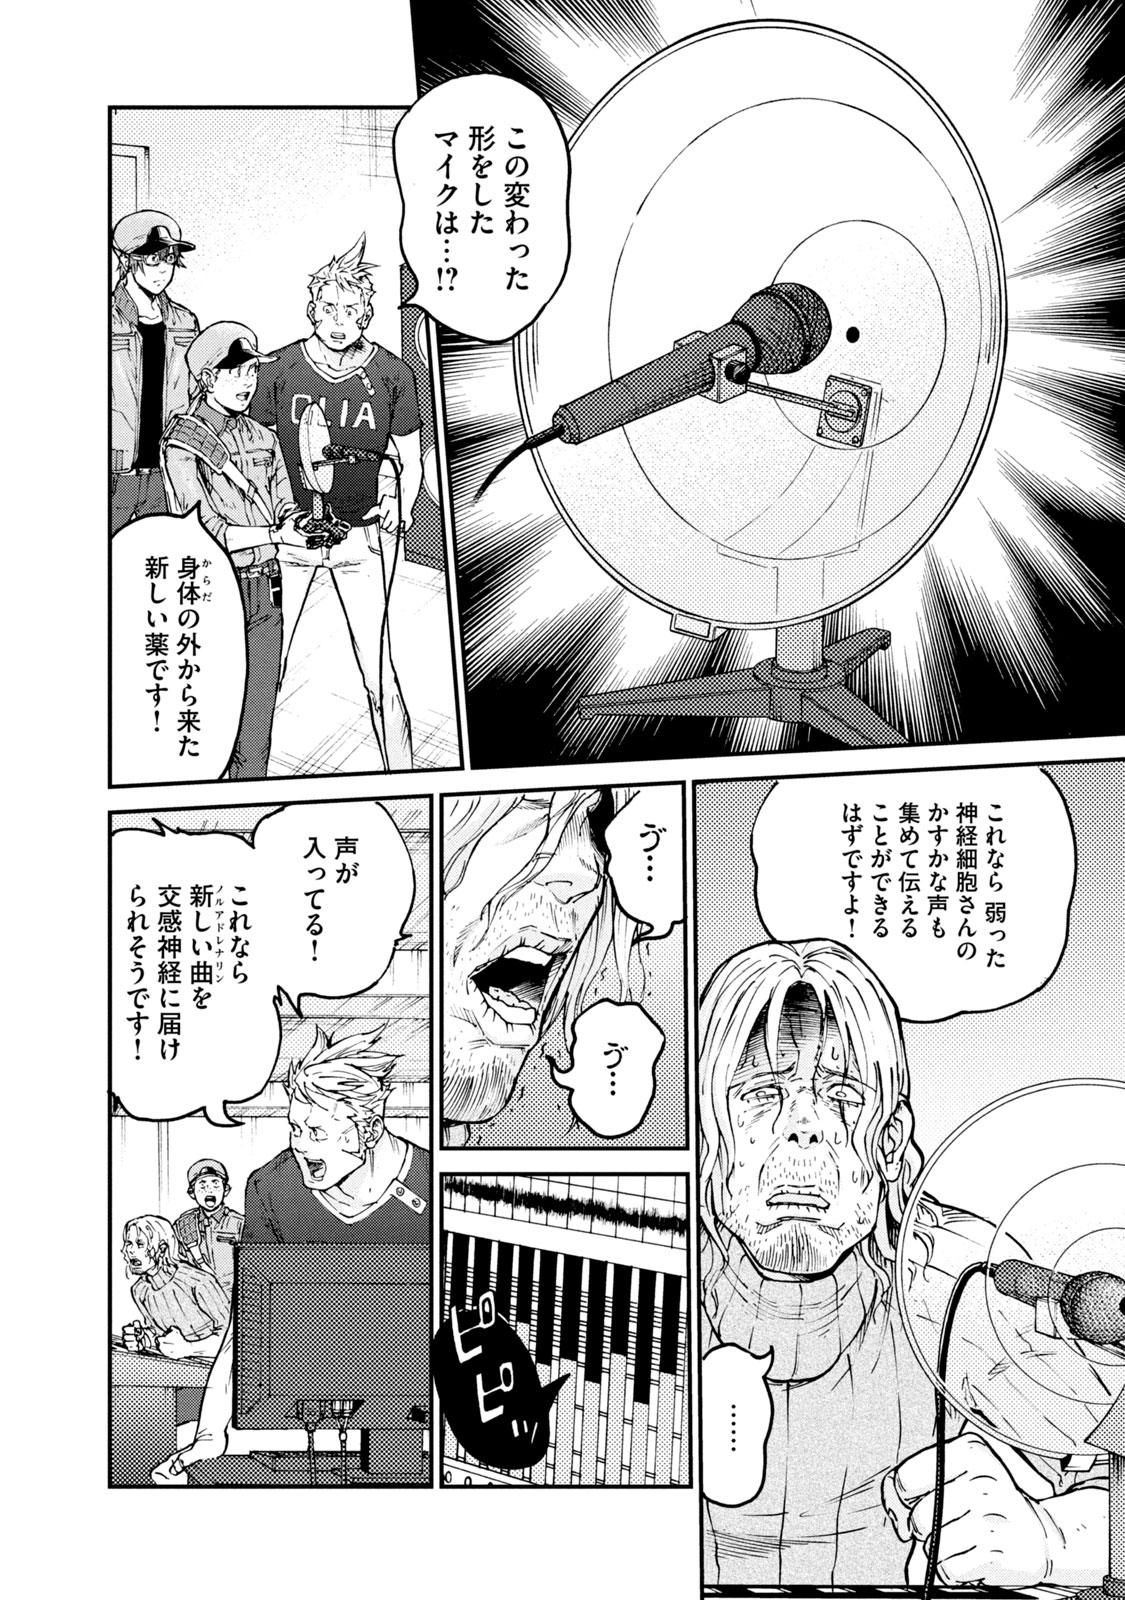 Hataraku Saibou BLACK - Chapter 35 - Page 10